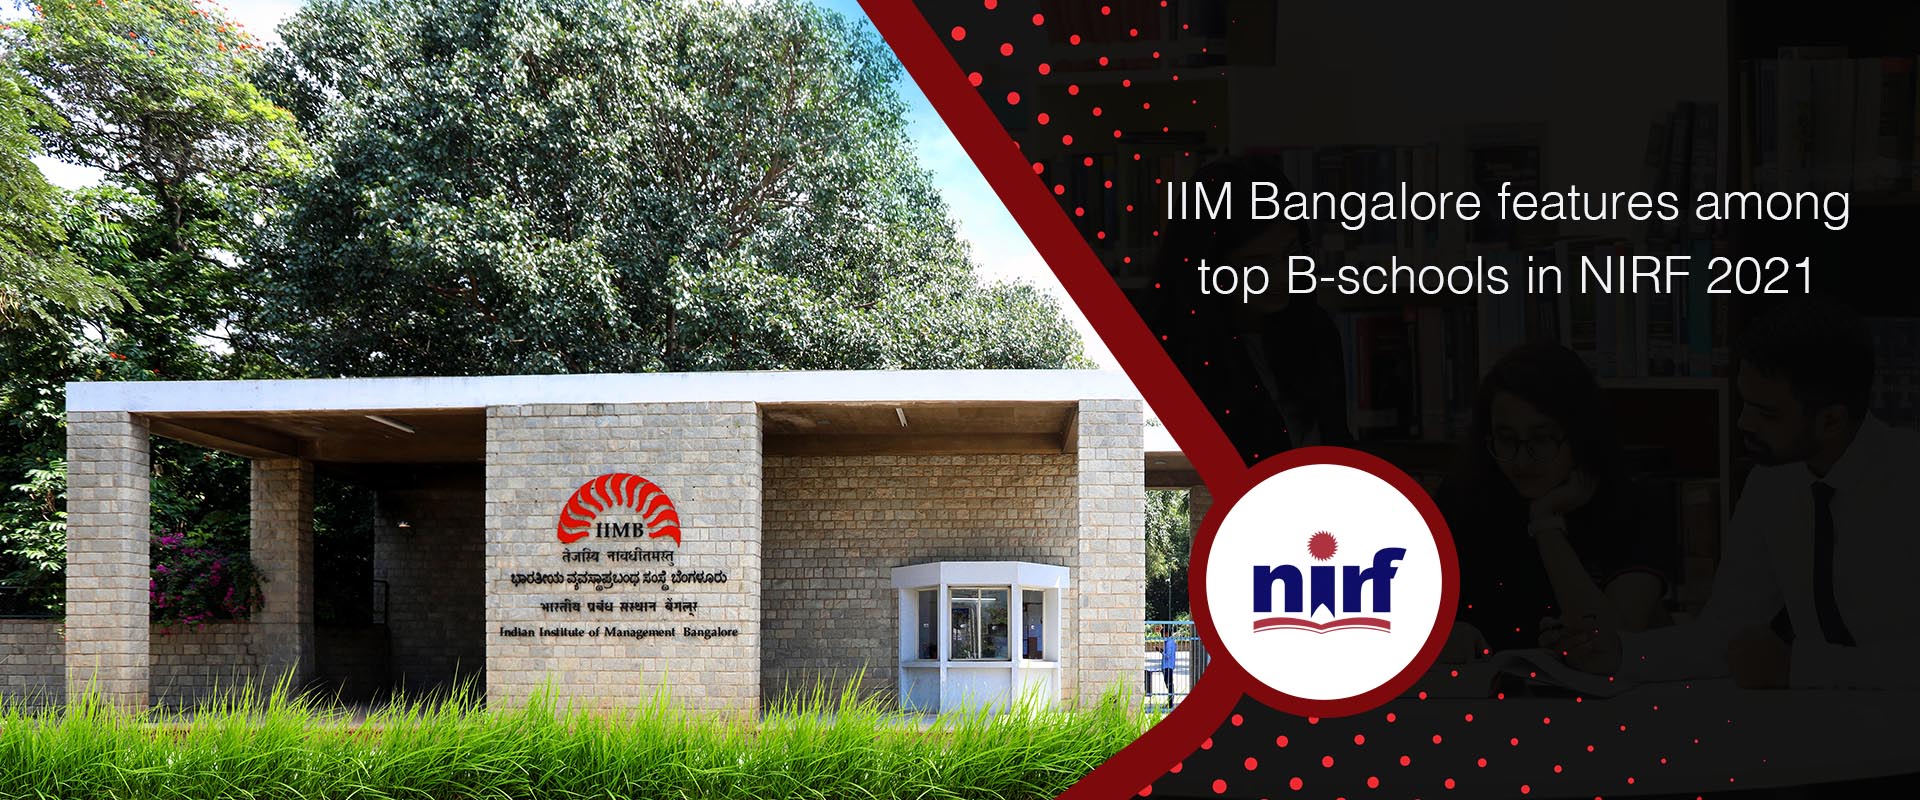 IIM Bangalore features among top B-schools in NIRF 2021